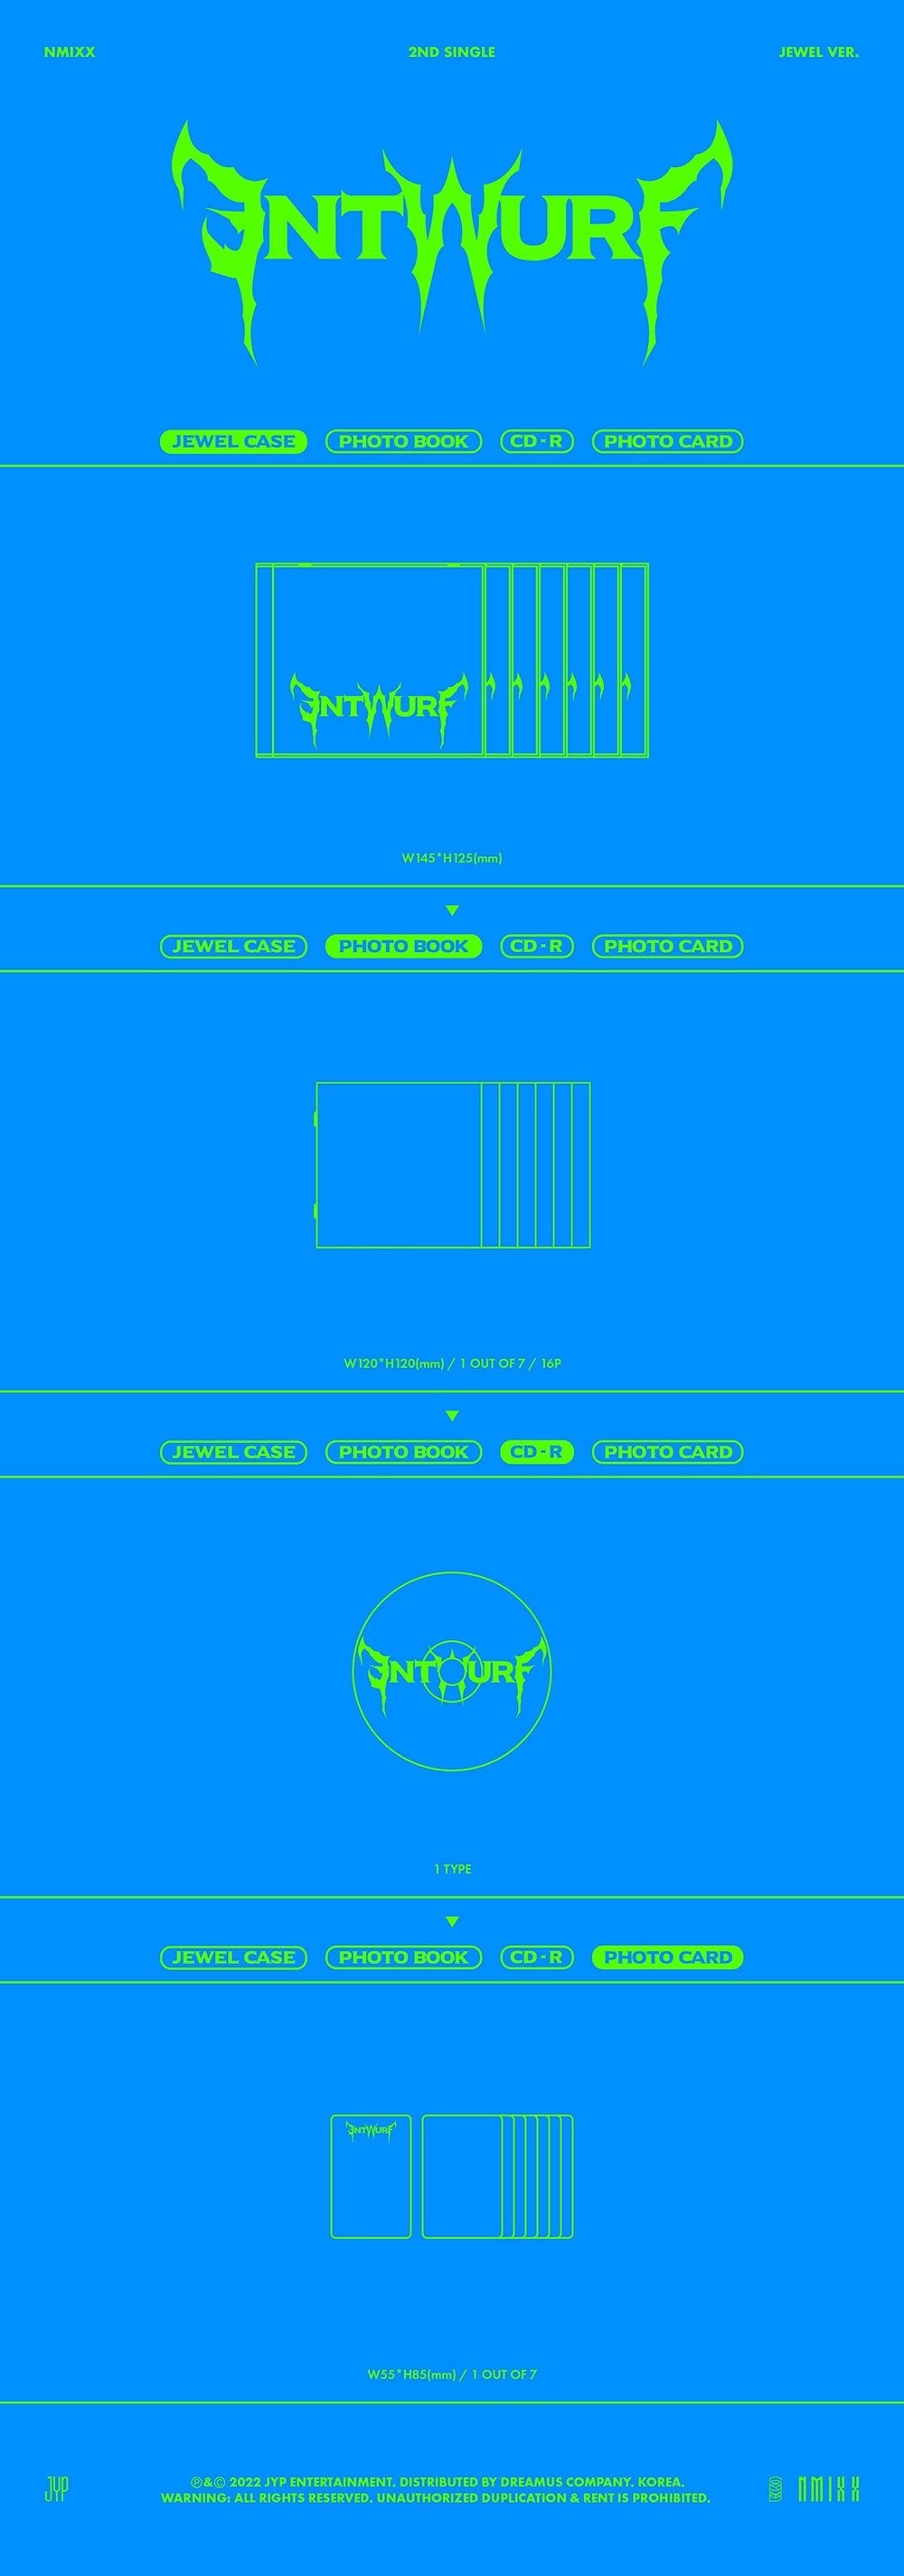 NMIXX – ENTWURF (2. Single-Album) Jewel Case Ver.